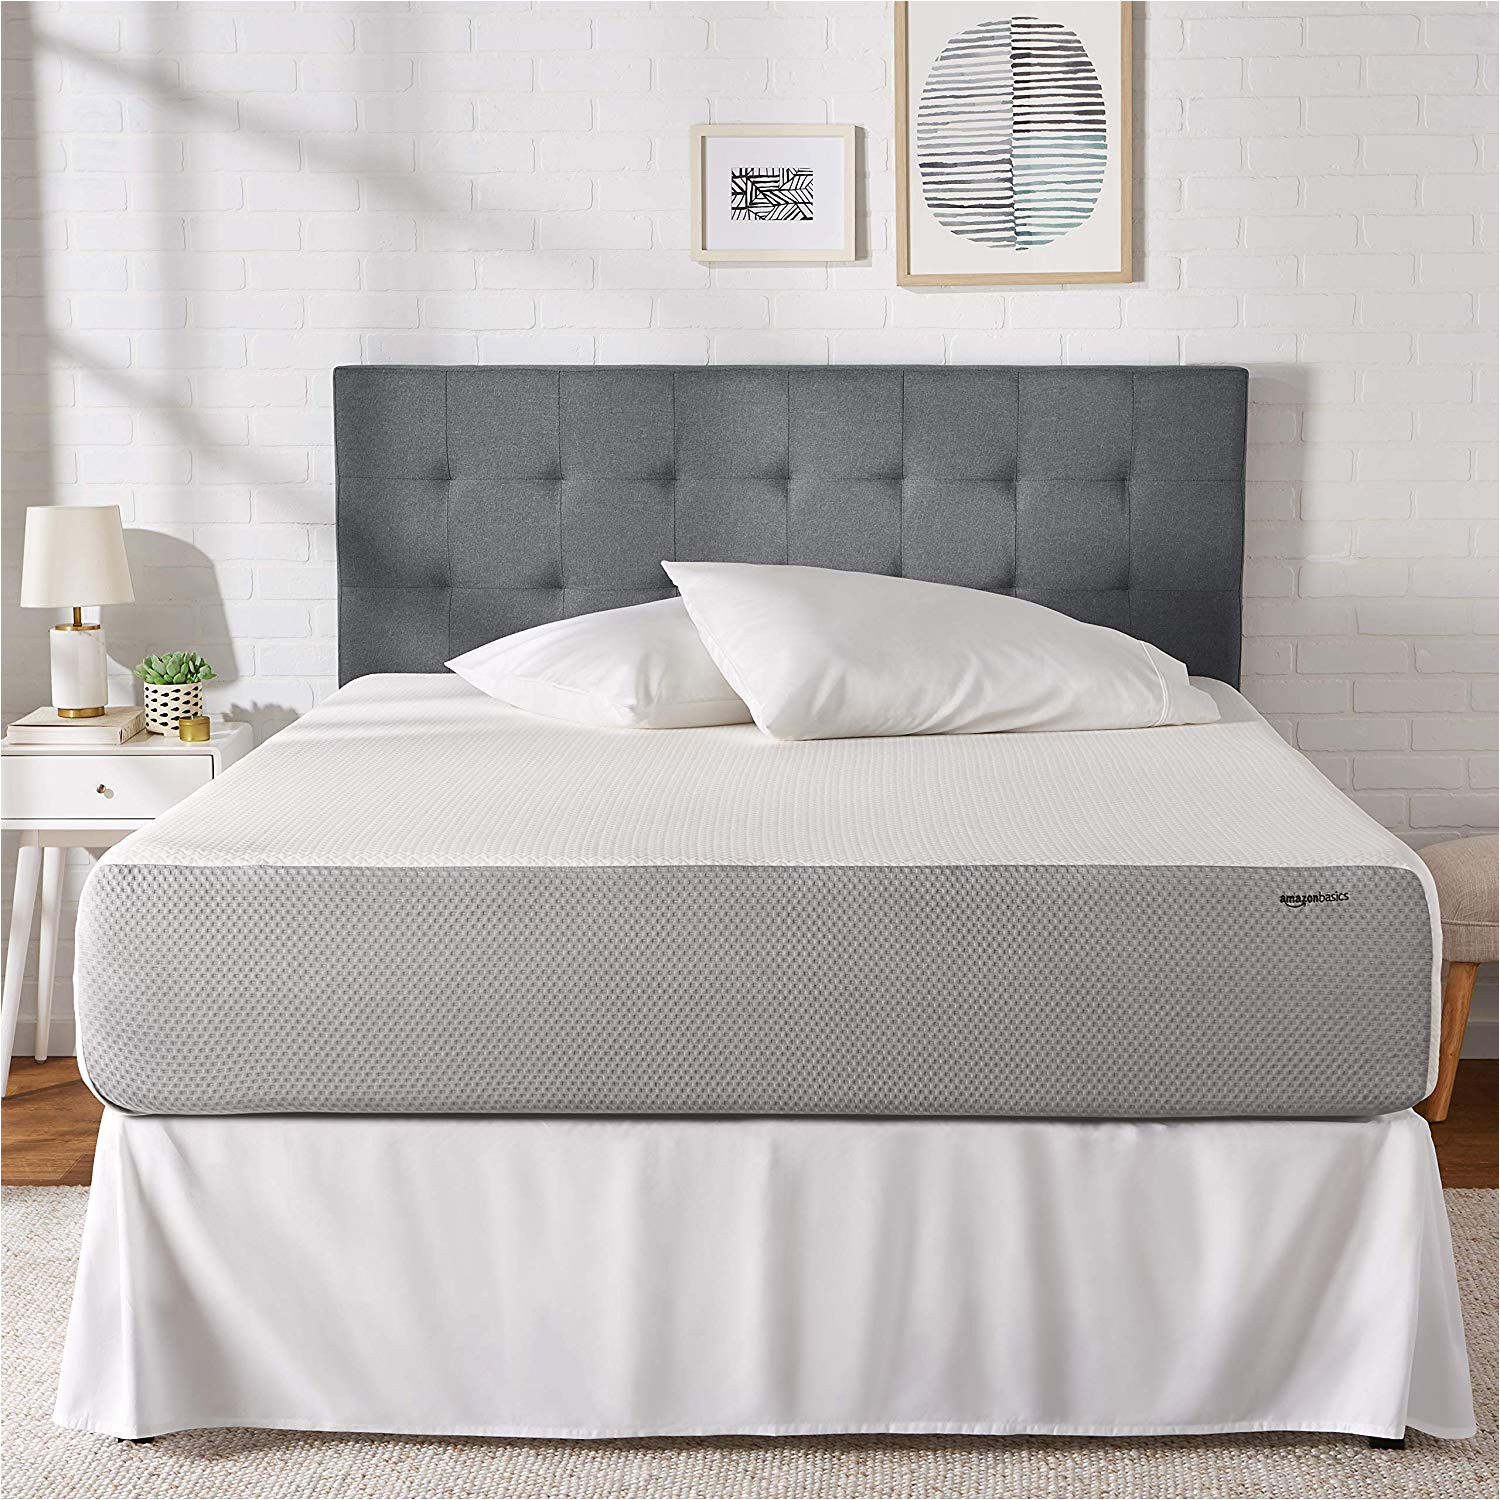 amazon com amazonbasics memory foam mattress soft plush feel certipur us certified 12 inch king kitchen dining